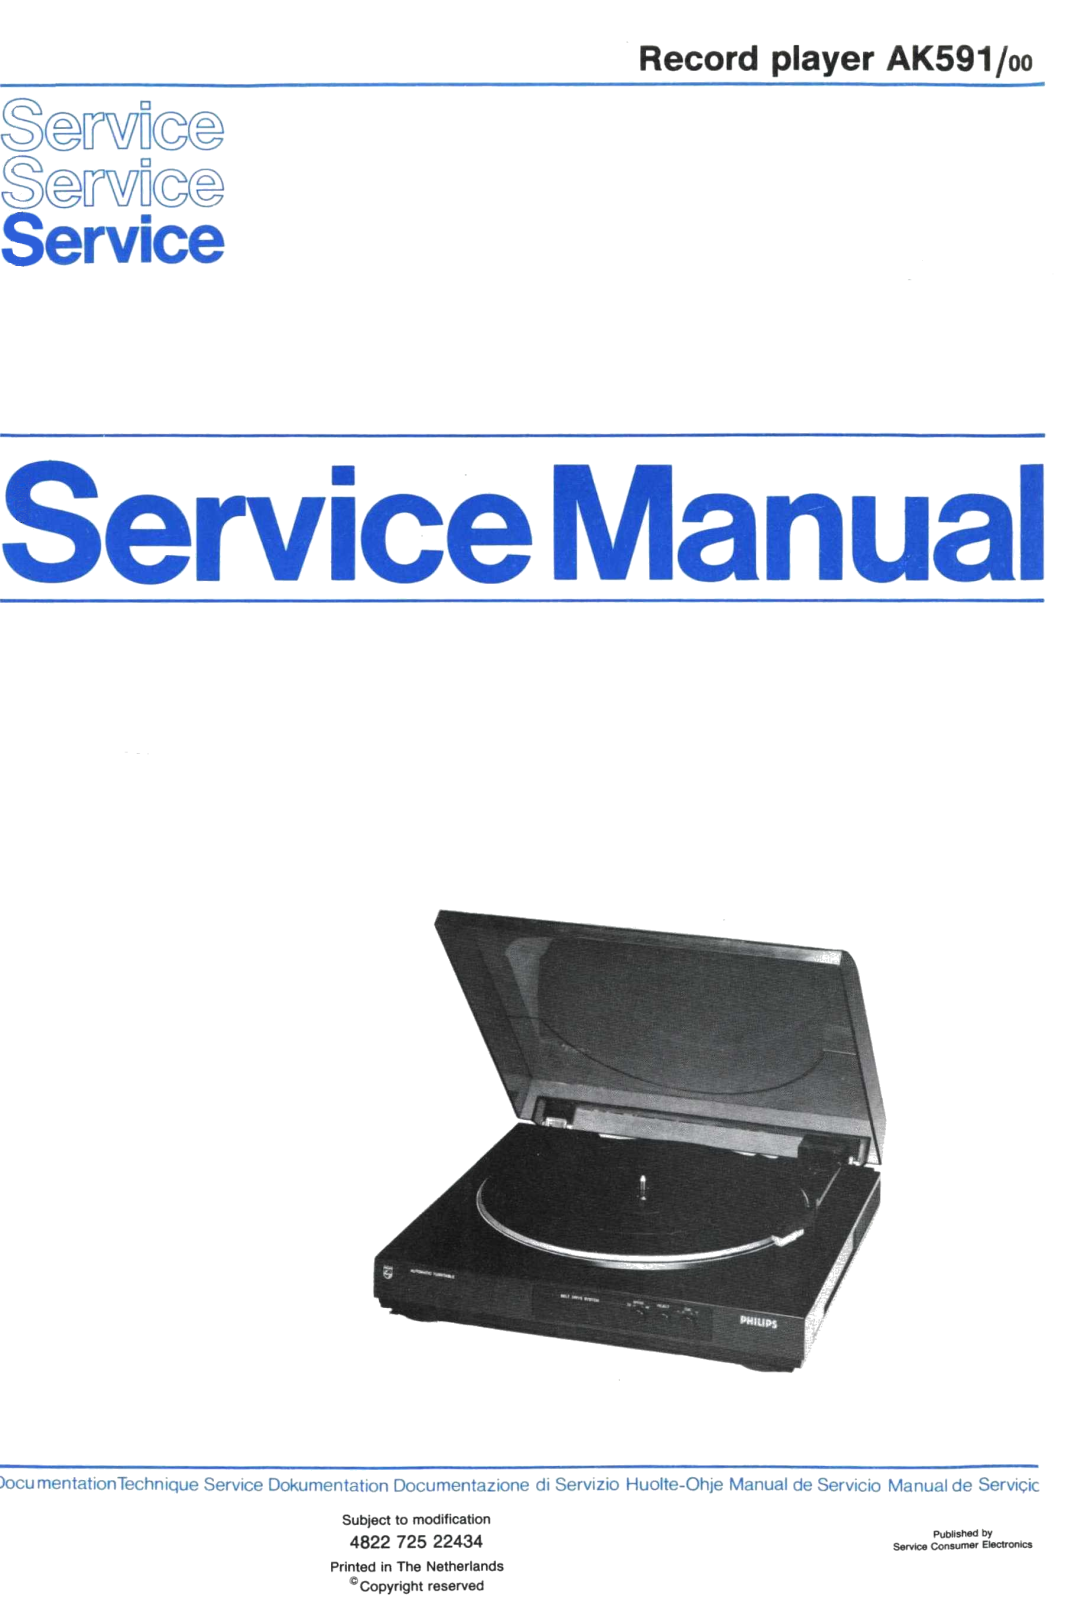 Philips AK-591 Service Manual